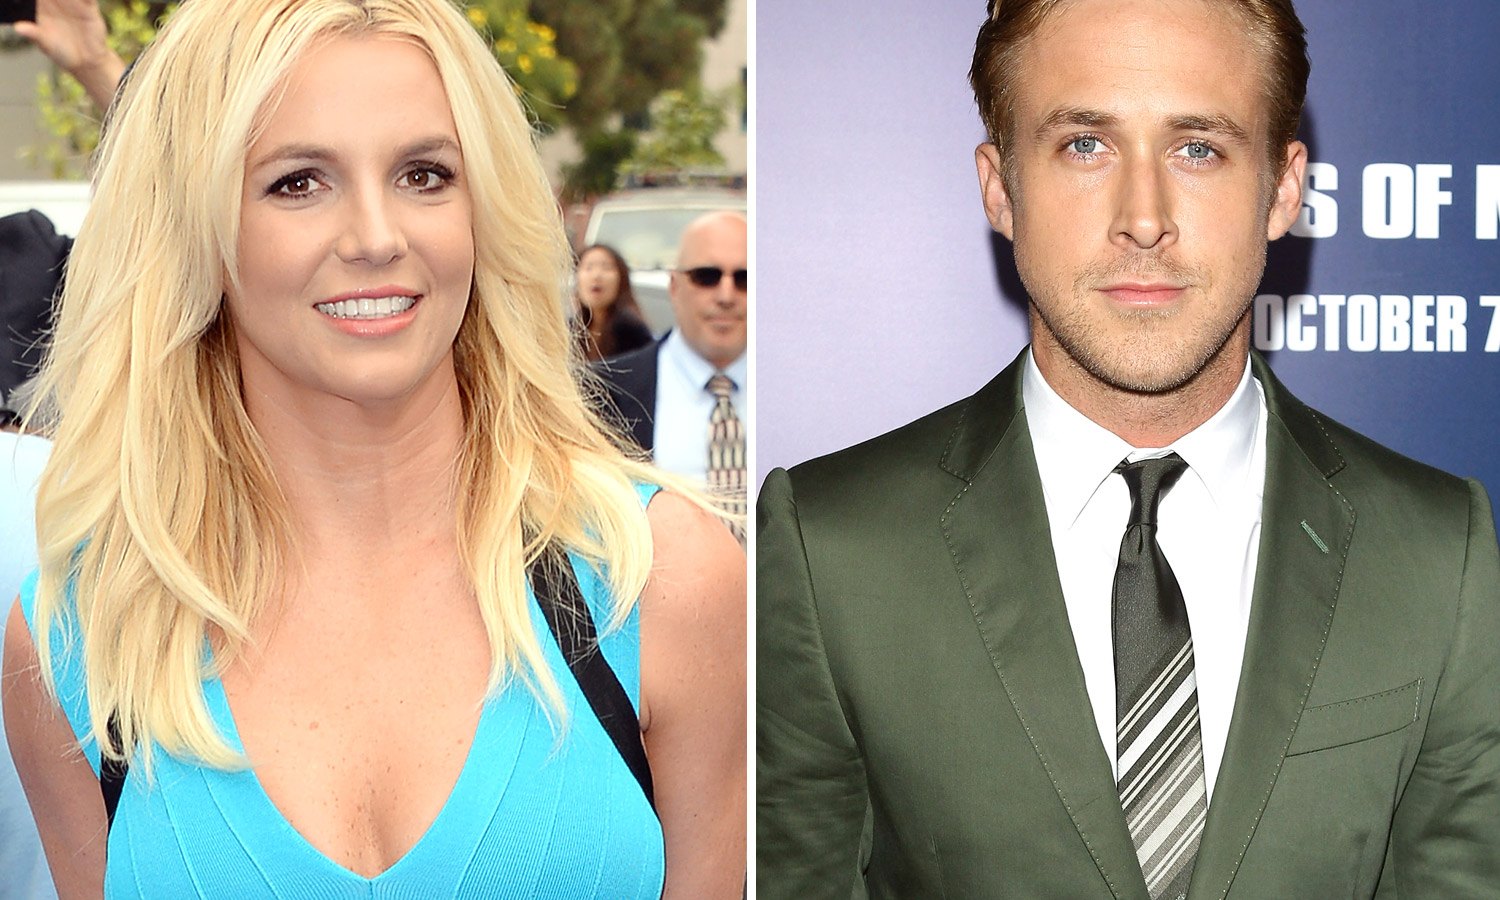 Britney Spears and Ryan Gosling